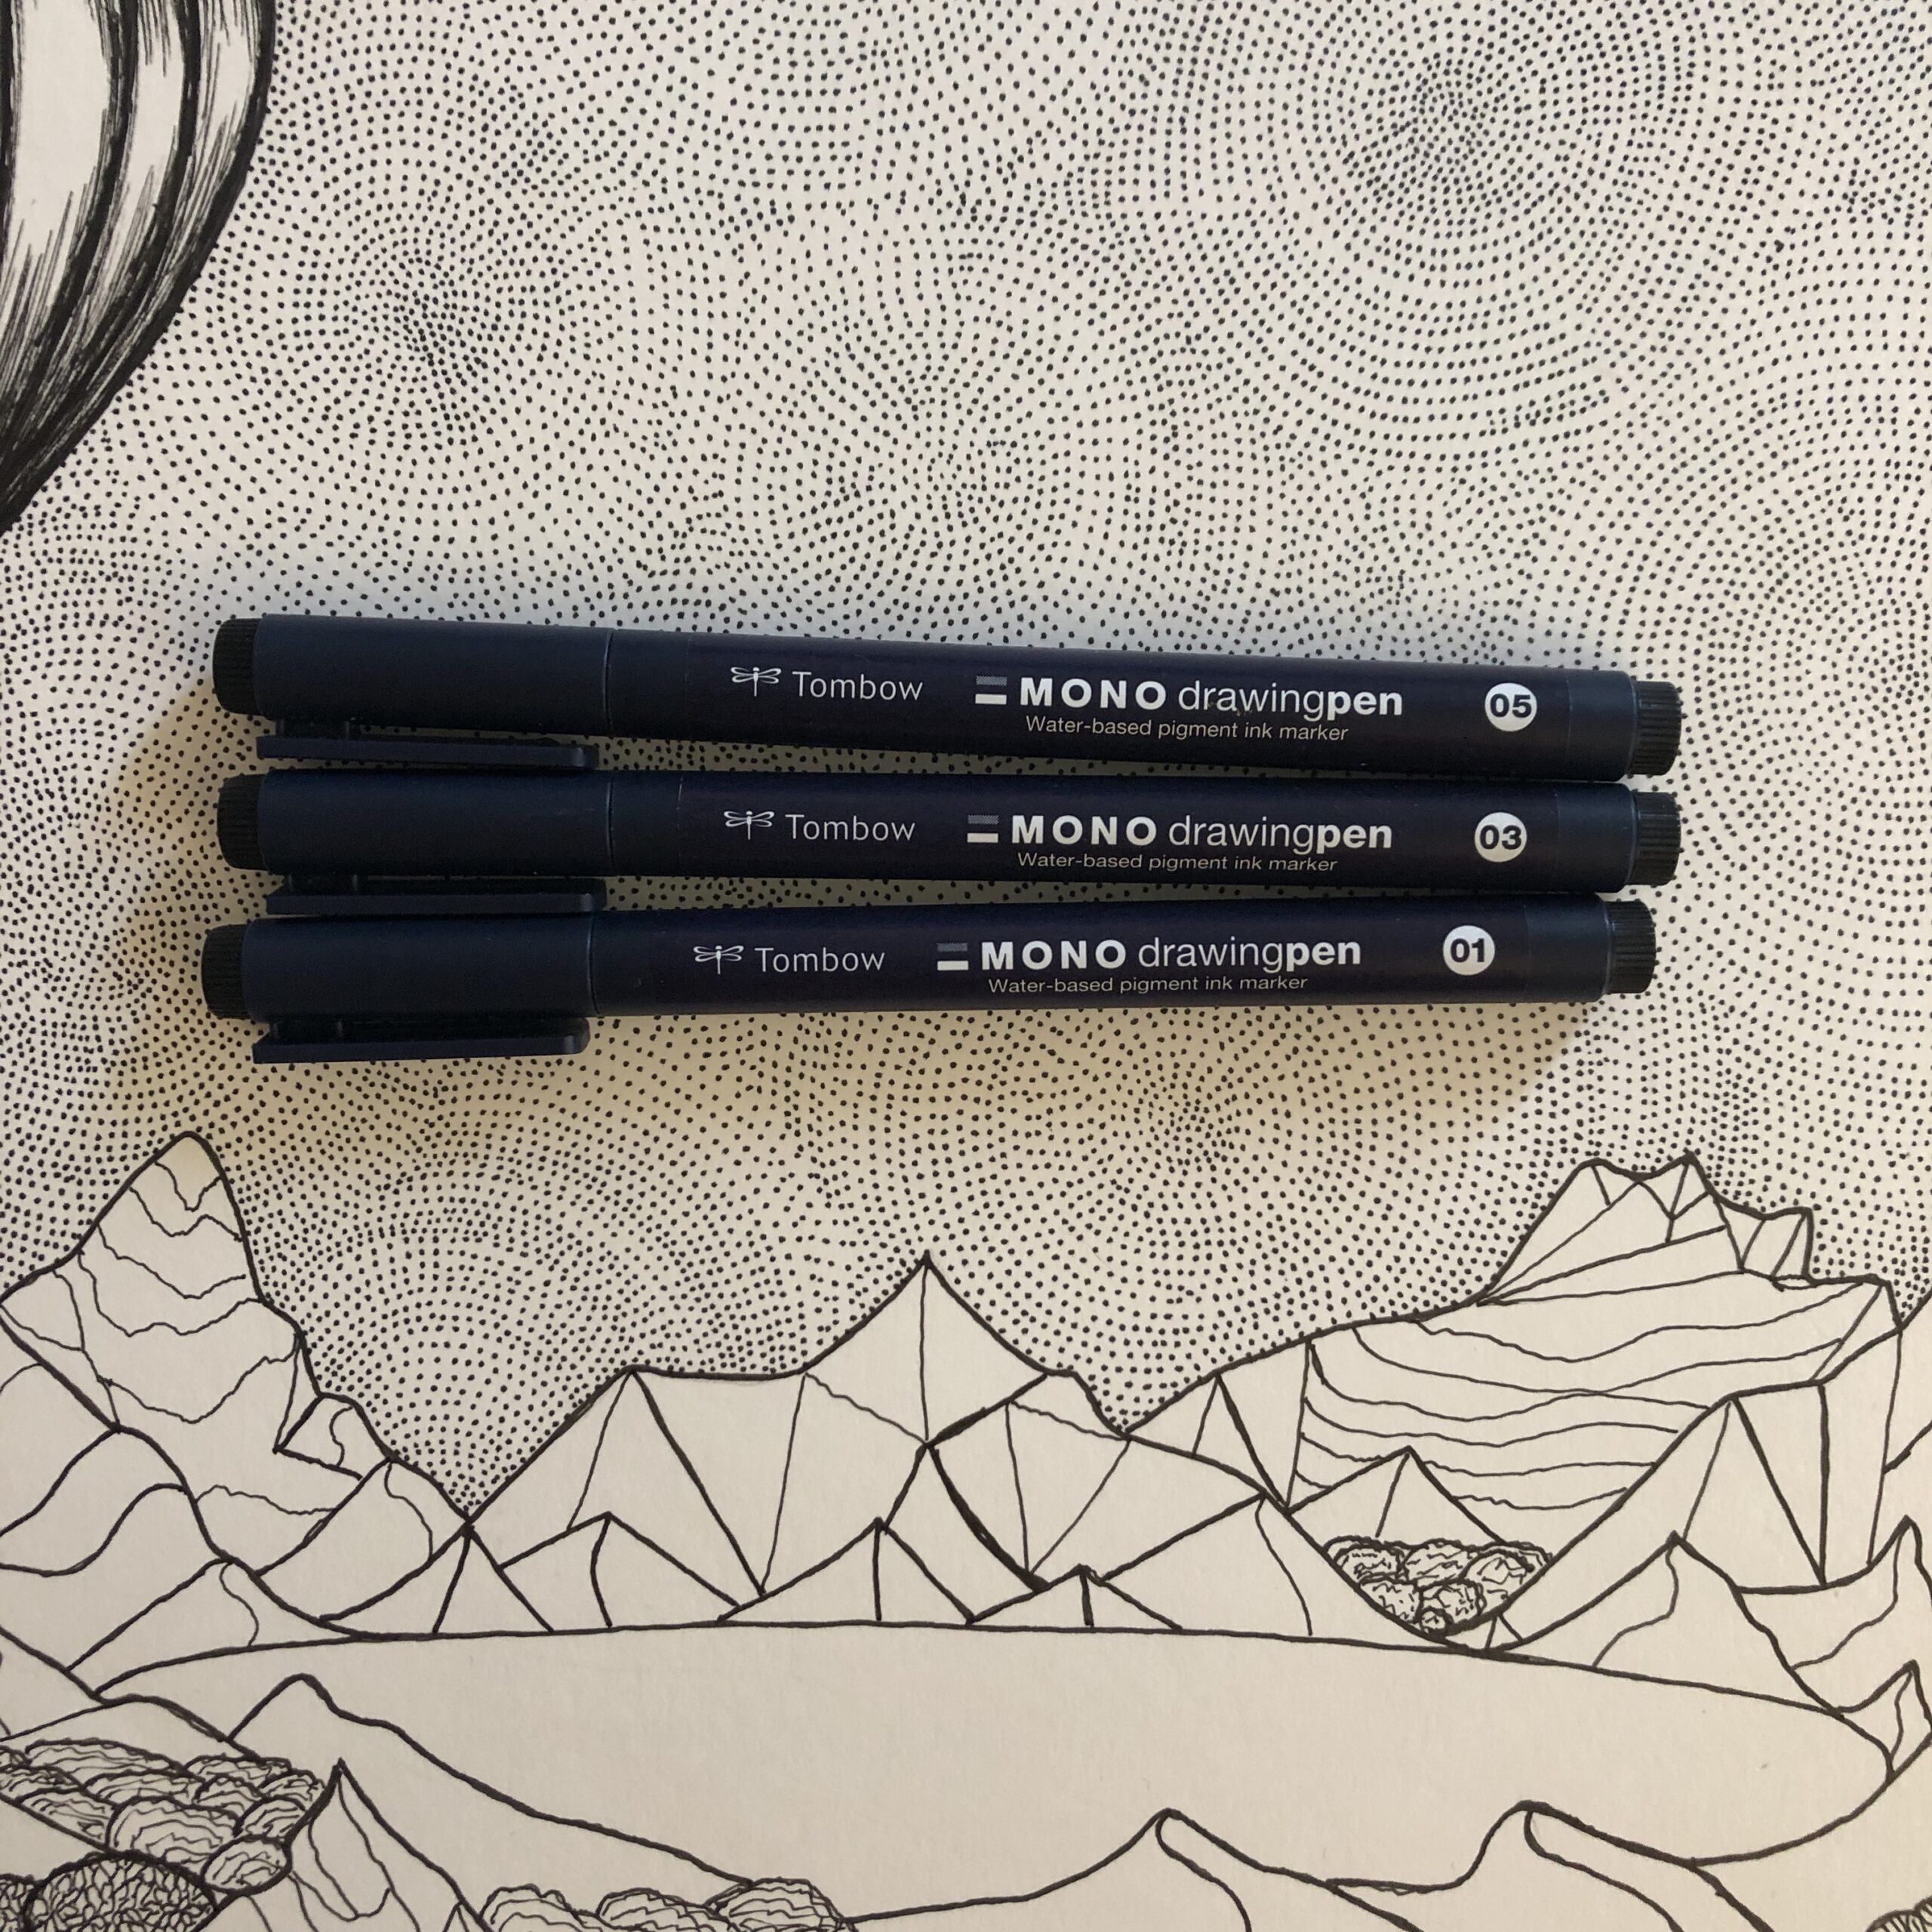 MONO Drawing Pen